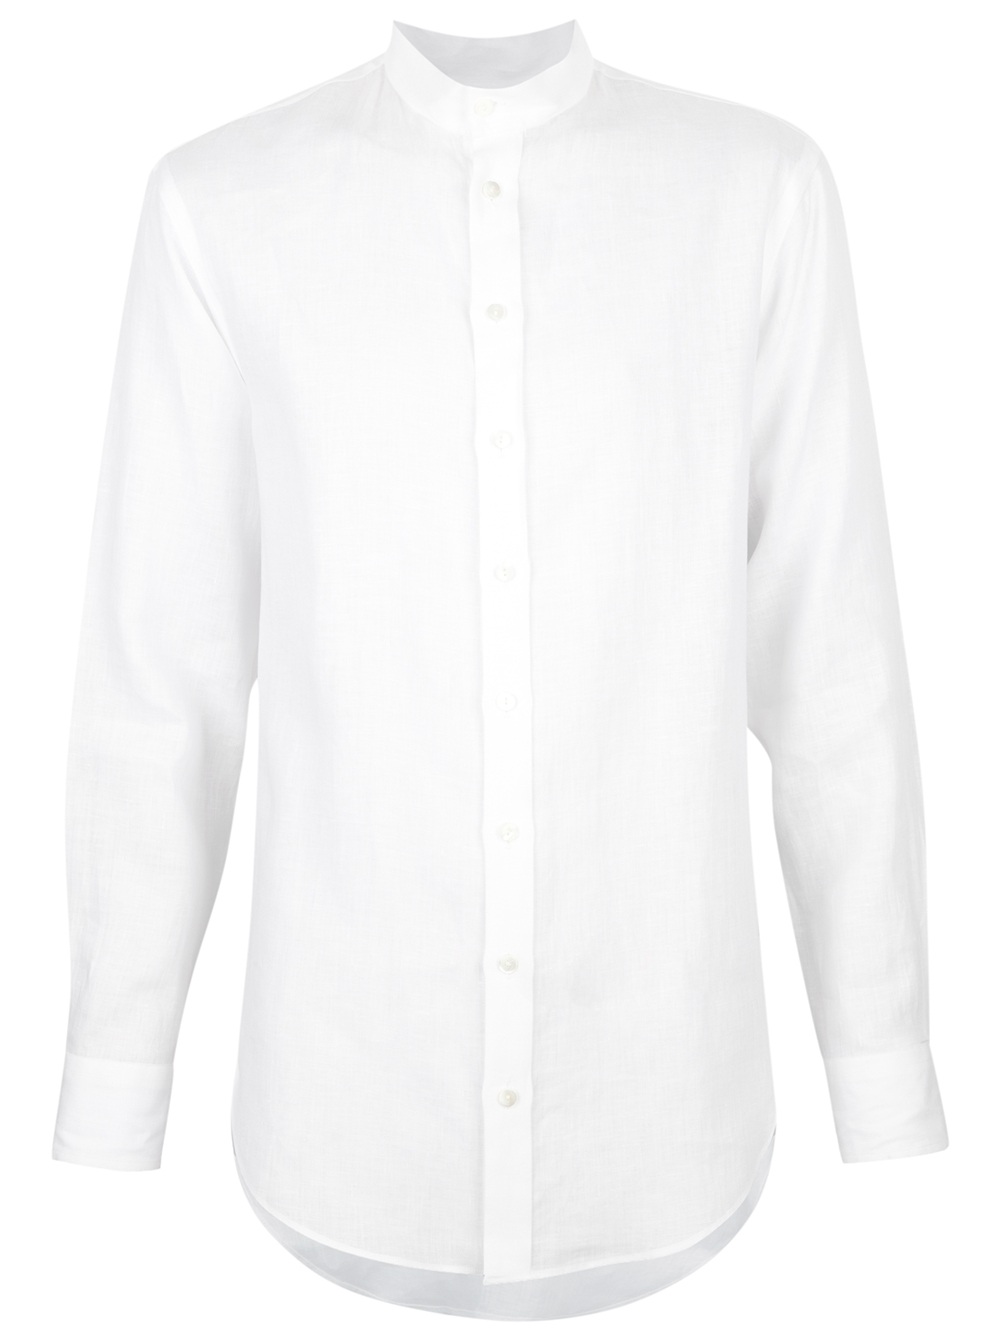 Lyst - Giorgio Armani Collarless Button Down Shirt in White for Men